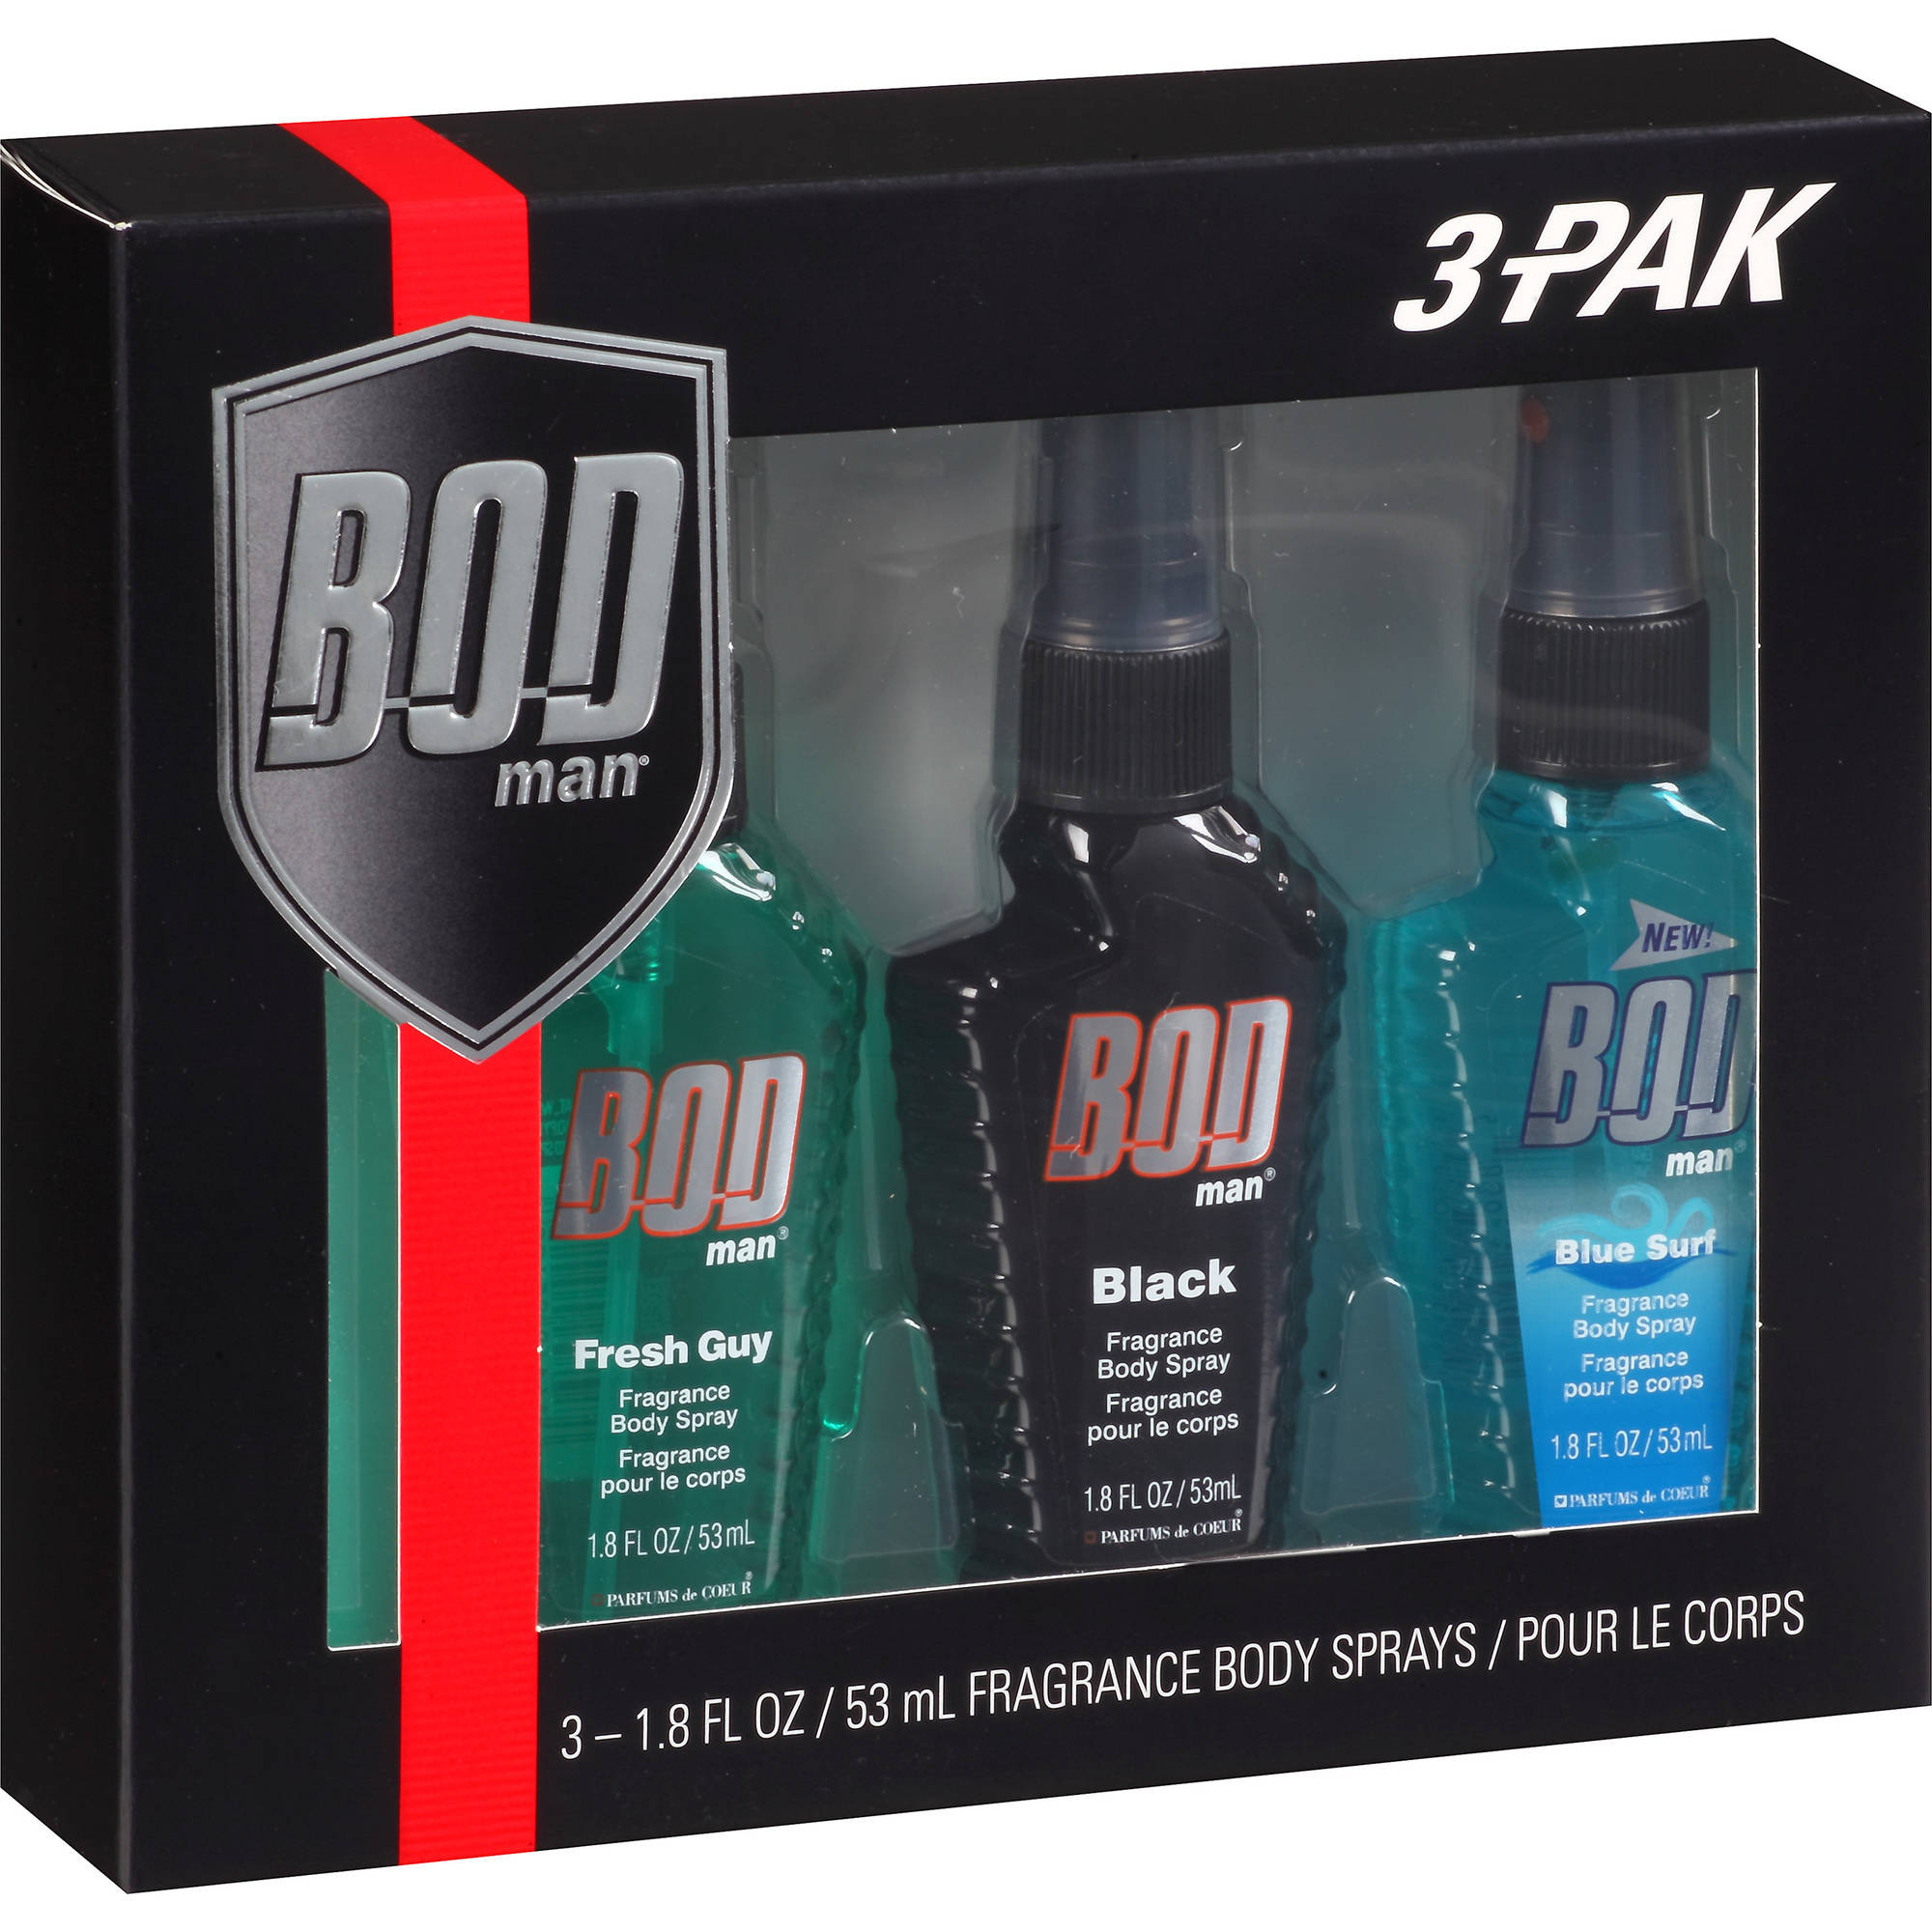 BOD Man Fragrance Body Sprays, 1.8 fl oz, 3 count - image 1 of 1